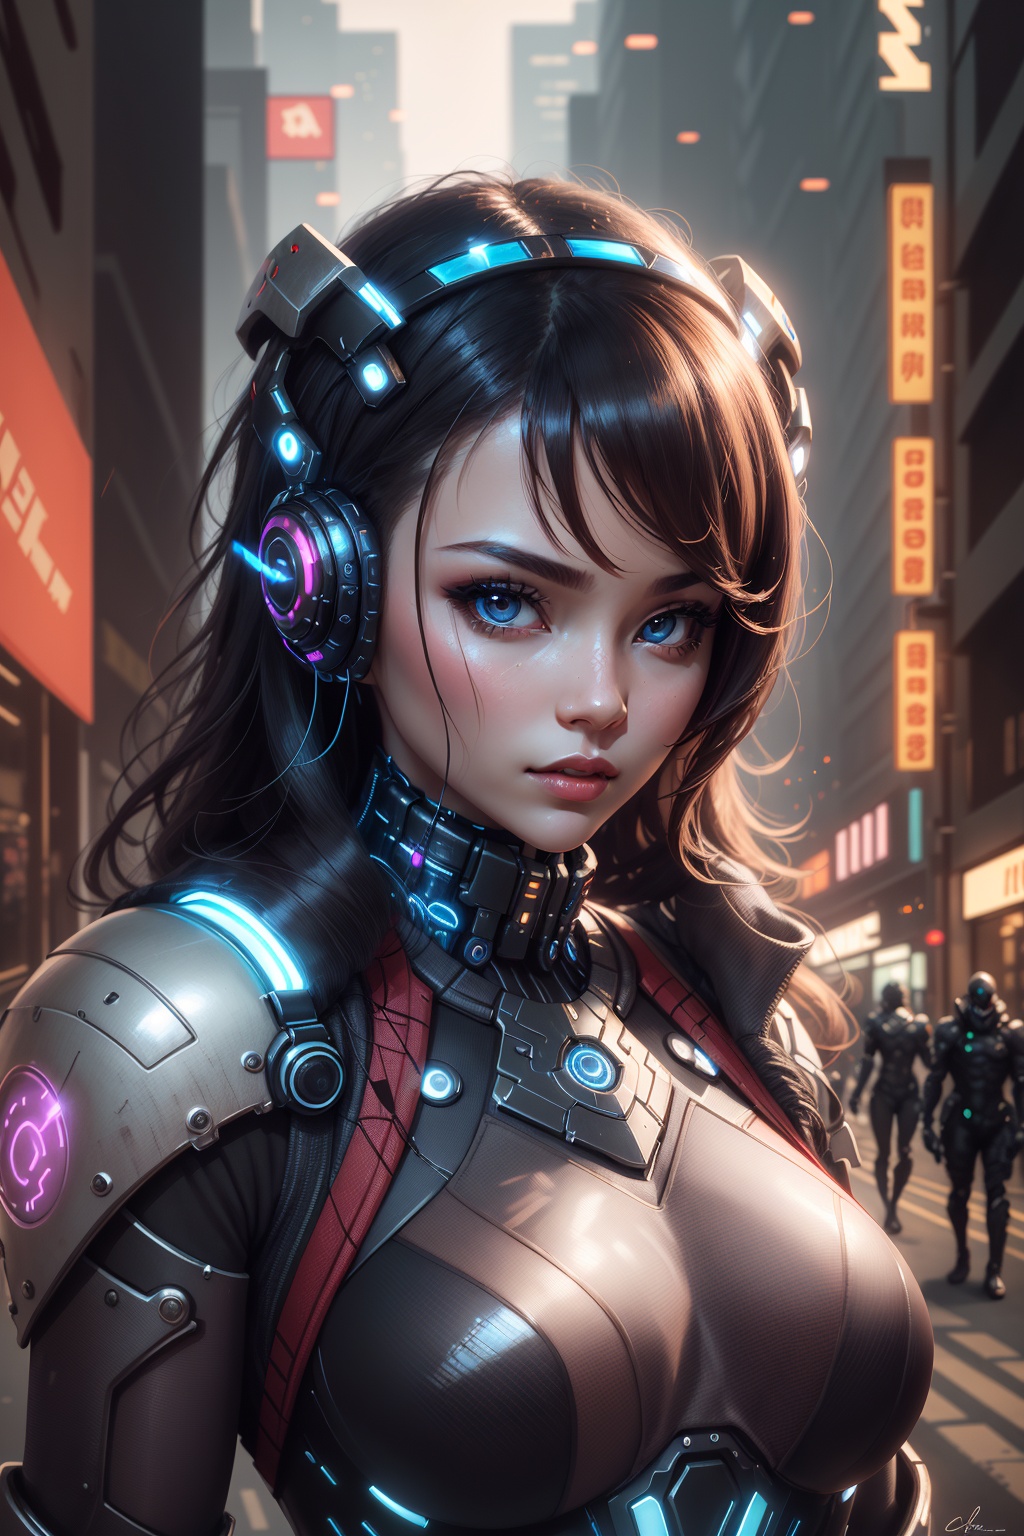 cyberpunkAI,1girl,cyberpunk,red armor suit,futuristic,woman,asian,portrait,city lights,mechanical elements,high-tech,<lora:cyberpunkAI:0.8>,, masterpiece,best quality,